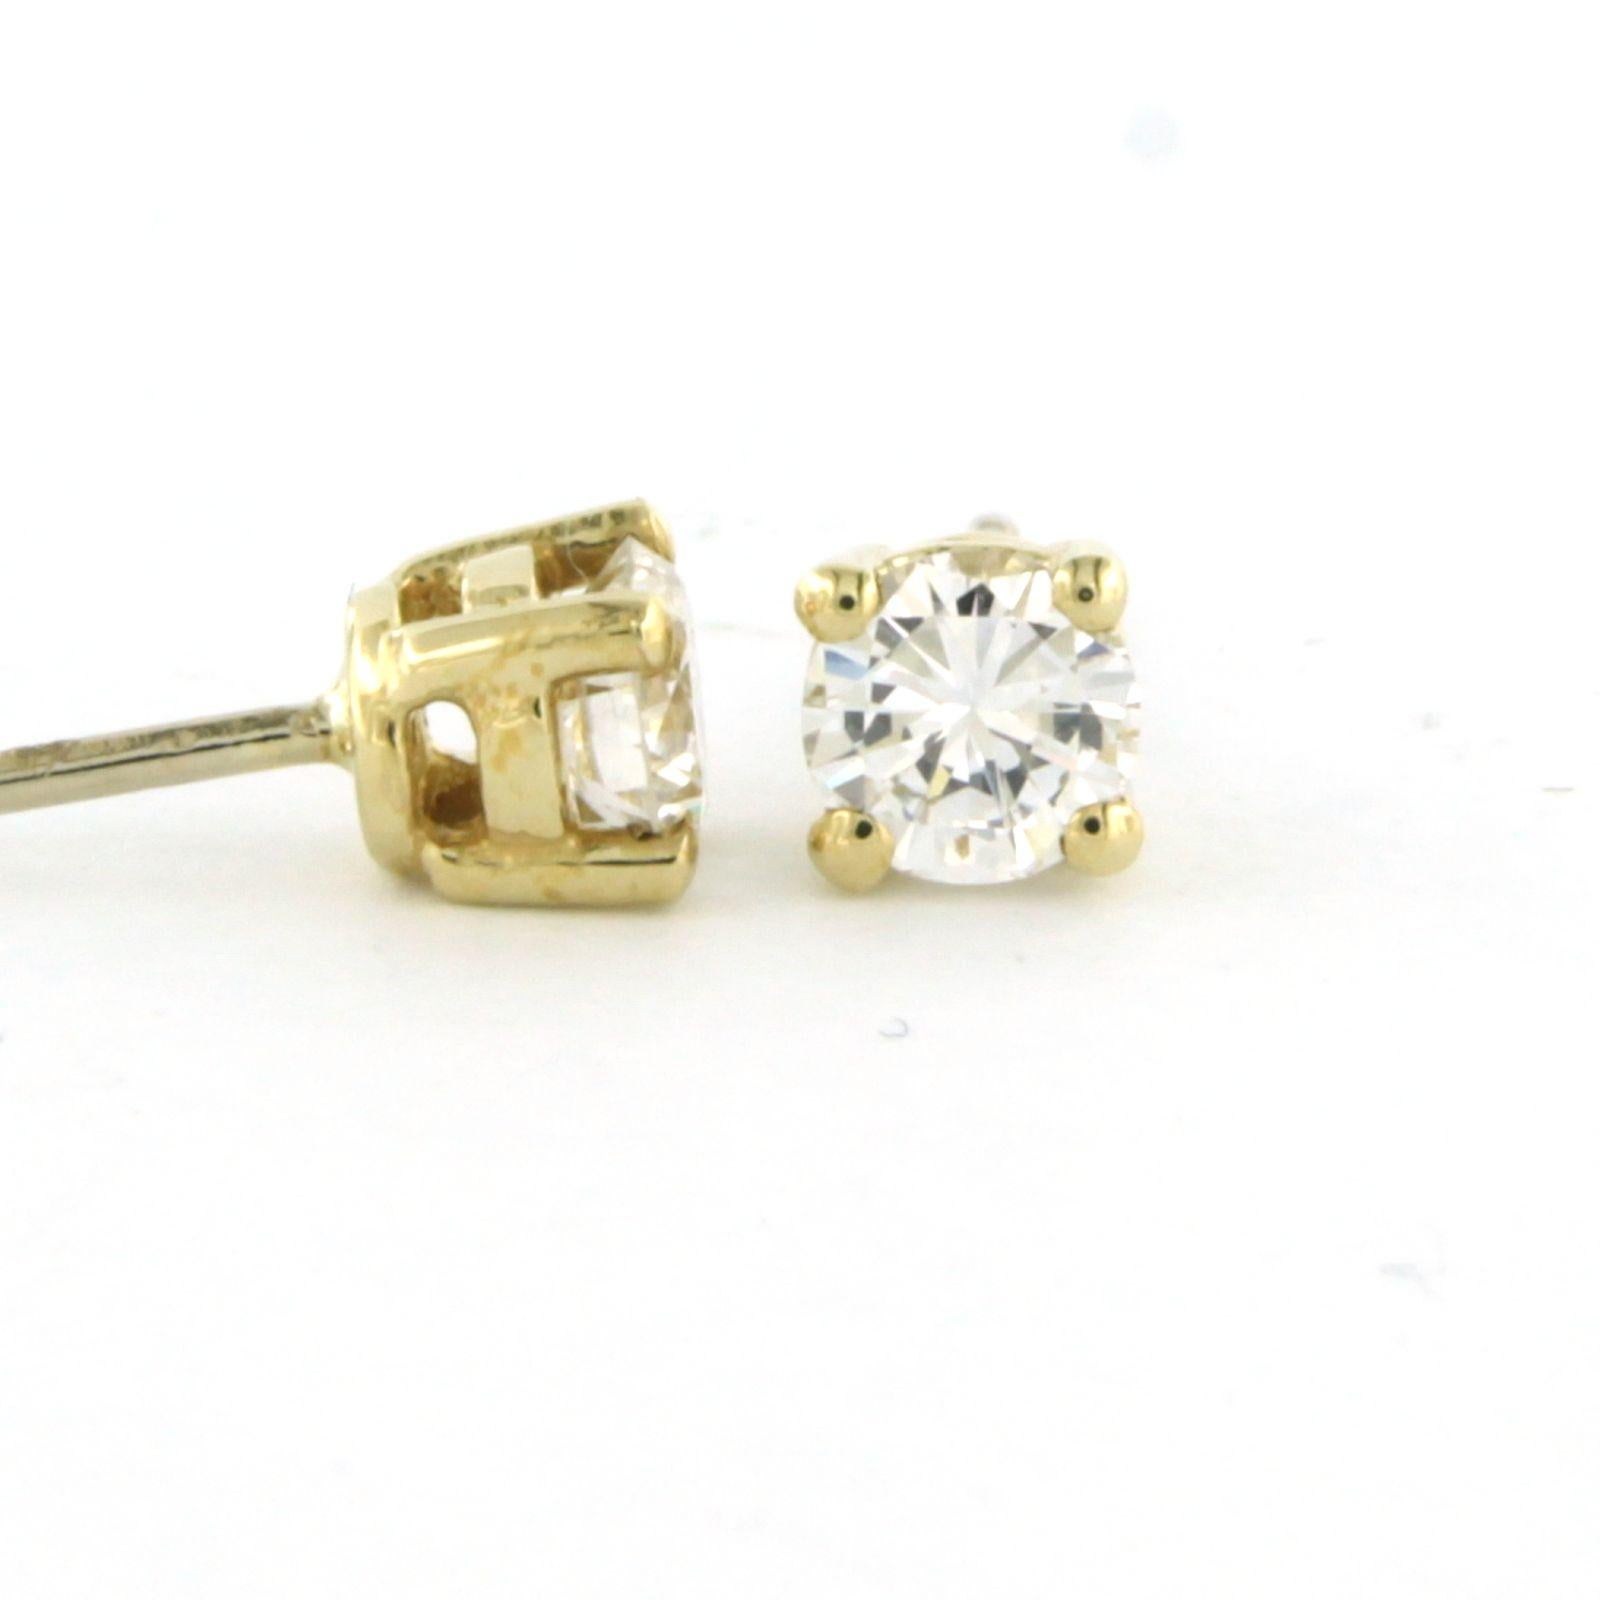 Brilliant Cut Earrings studs set with diamonds 14k yellow gold